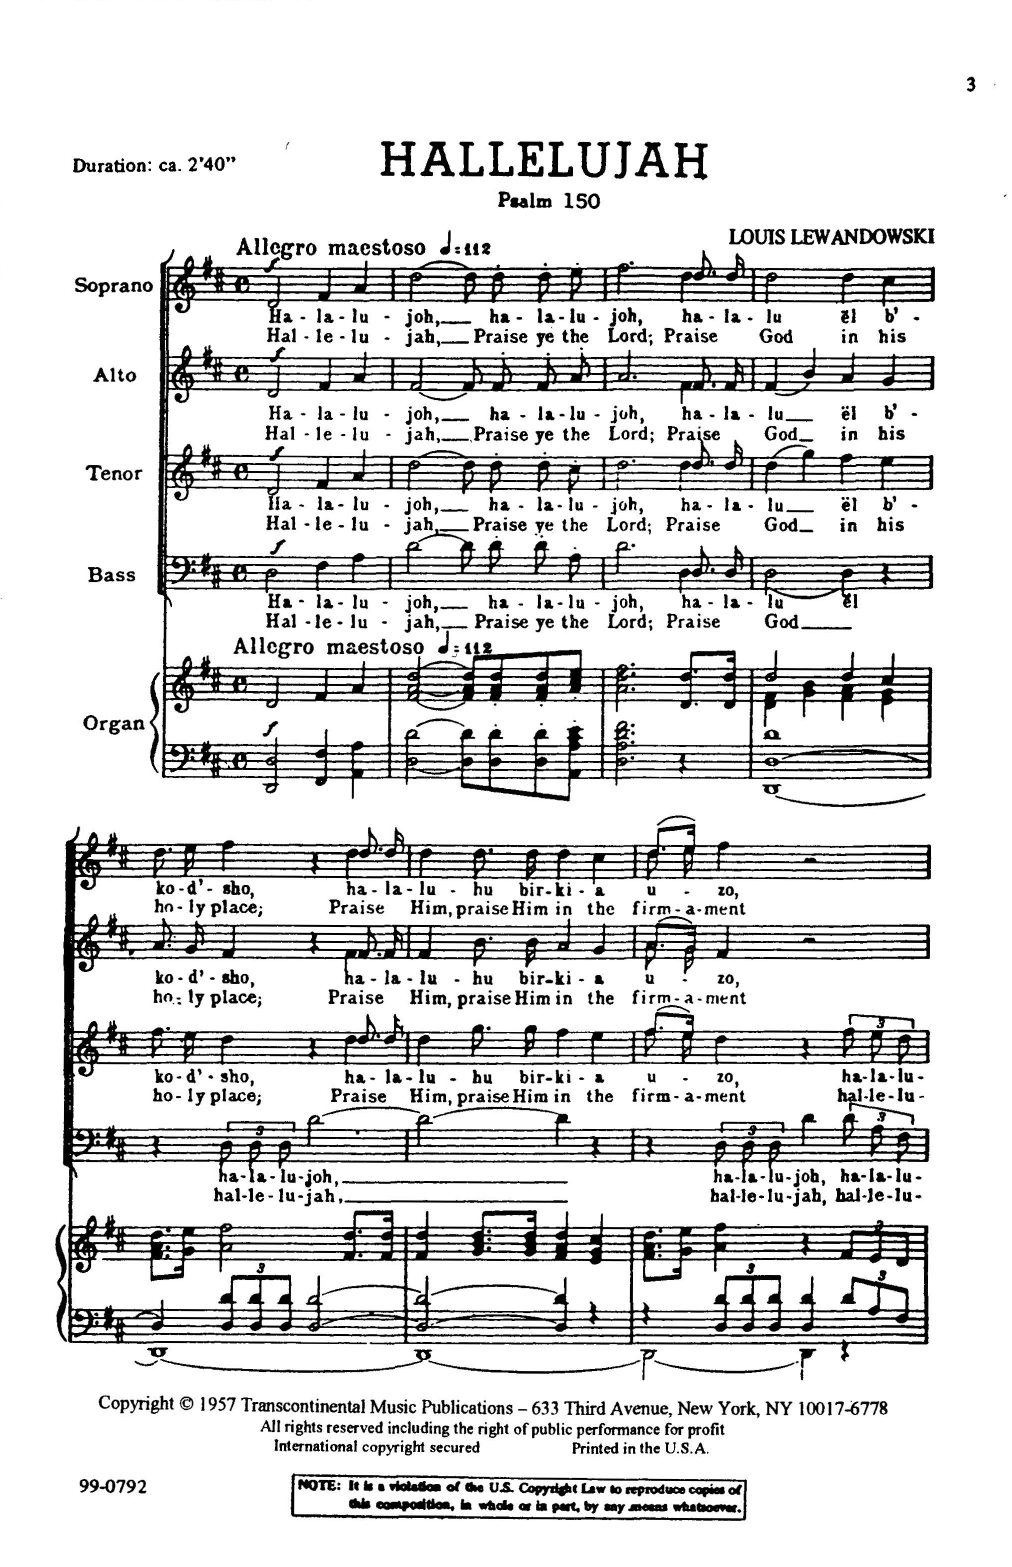 Louis Lewandowski Hallelujah (Psalm 150) sheet music notes and chords arranged for SATB Choir